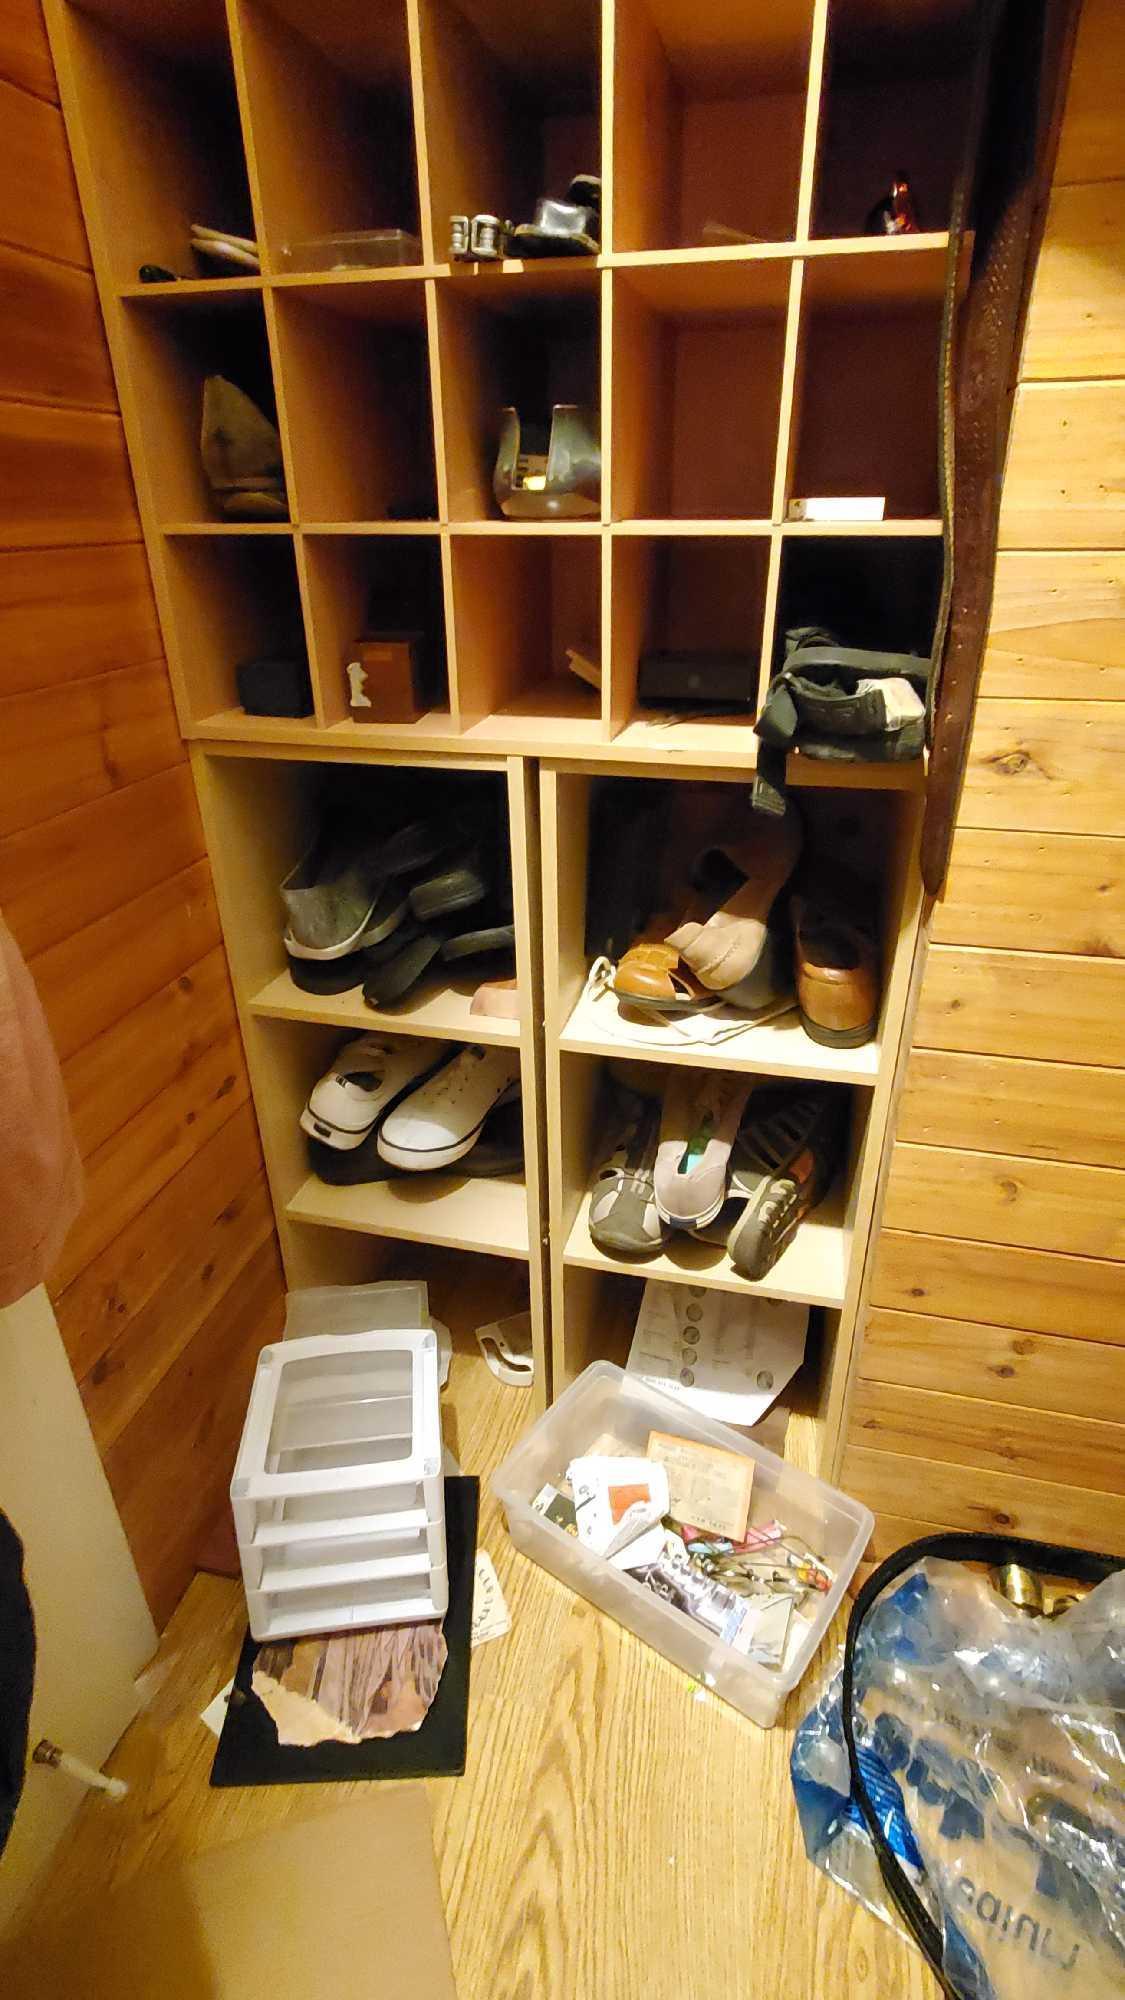 Walk in closet contents cothing shoes handags linnen etc. @ Farm